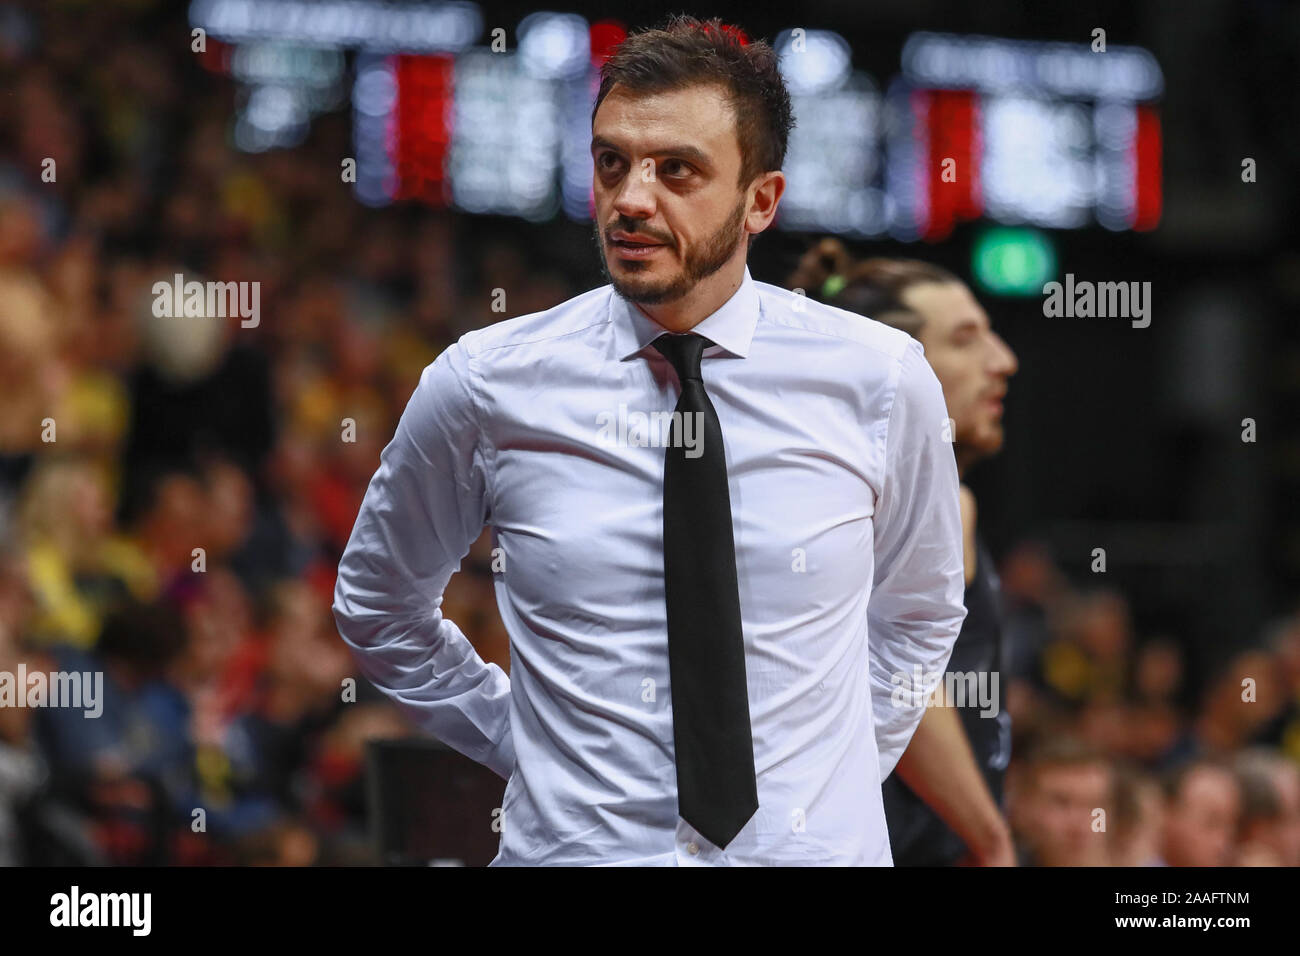 Oldenburg, Germany, November 20, 2019: Nicola Brienza, head coach of Aquila Basket Trento, during a Eurocup match at the Kleine EWE Arena. Stock Photo